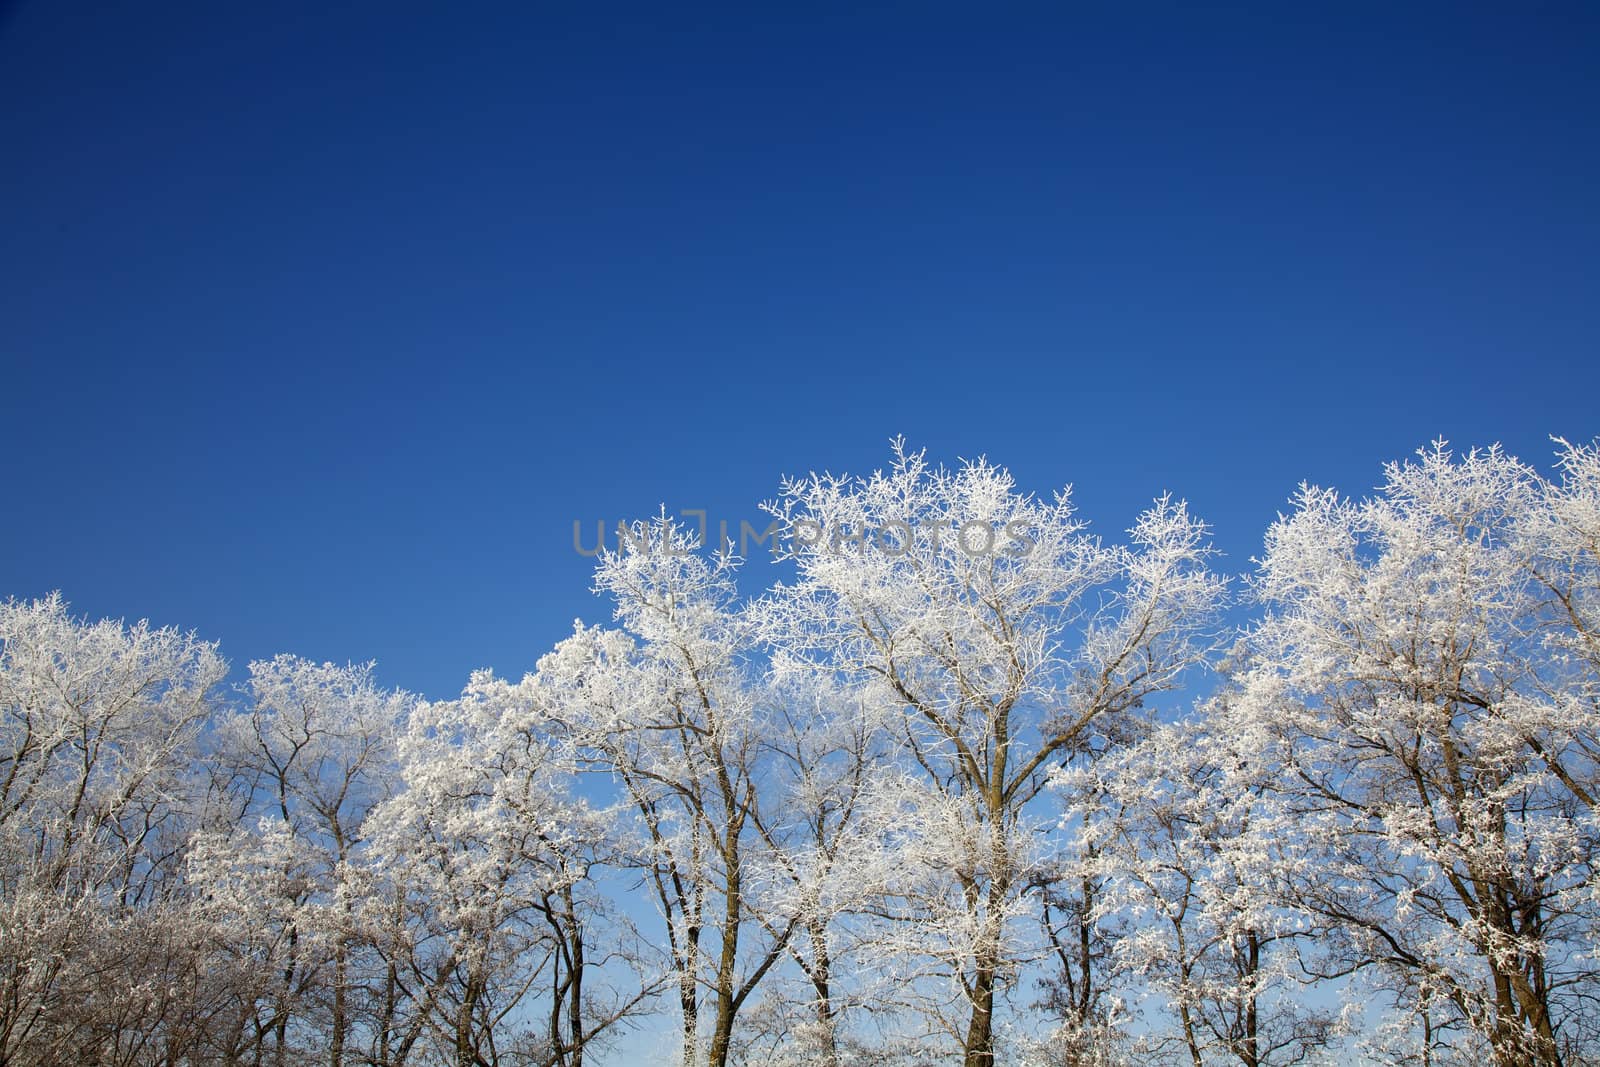 Winter frozen trees full of snow